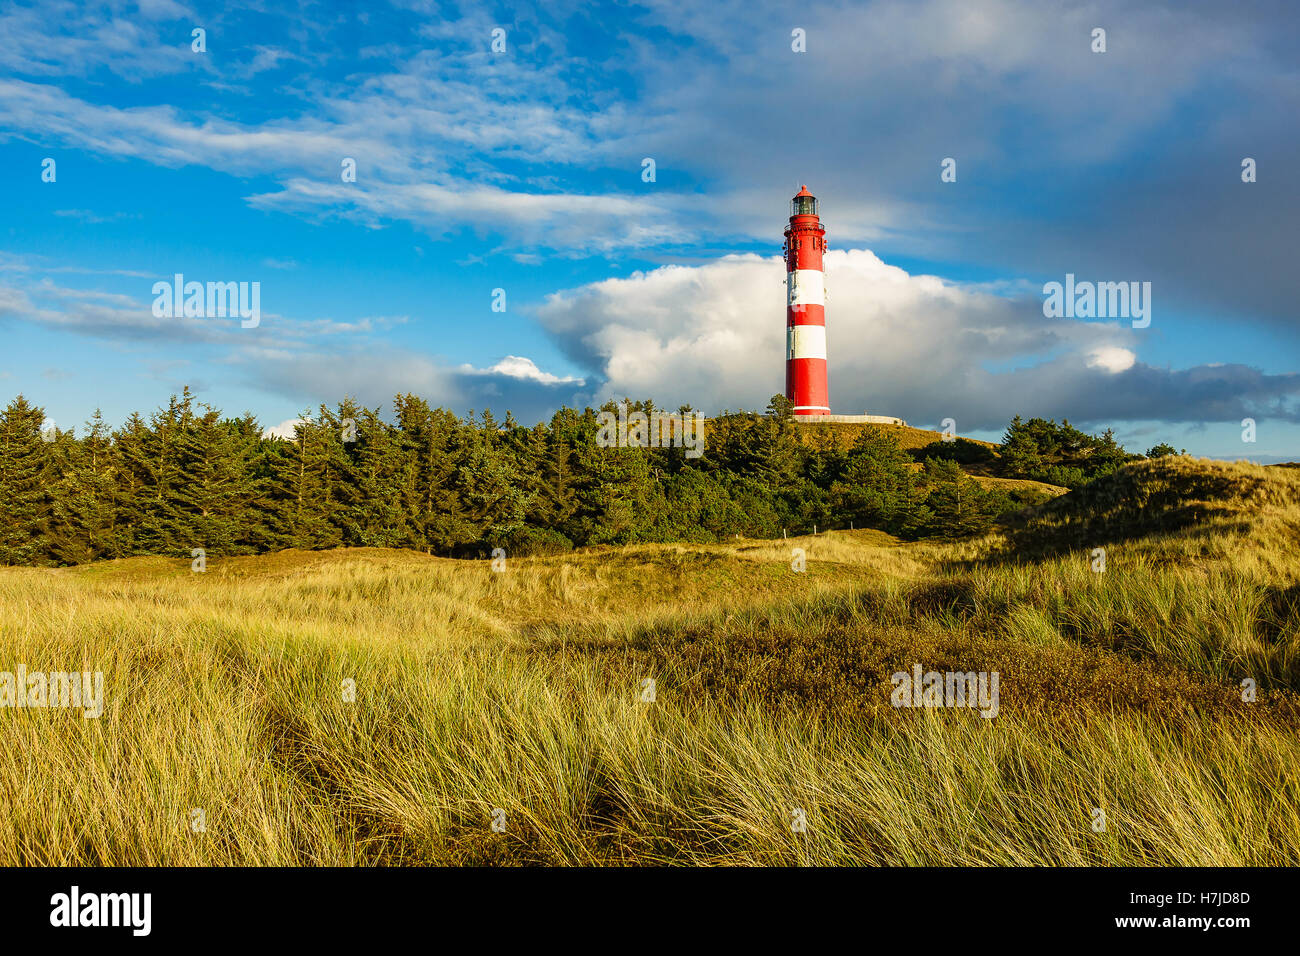 Lighthouse in Wittduen on the island Amrum, Germany Stock Photo